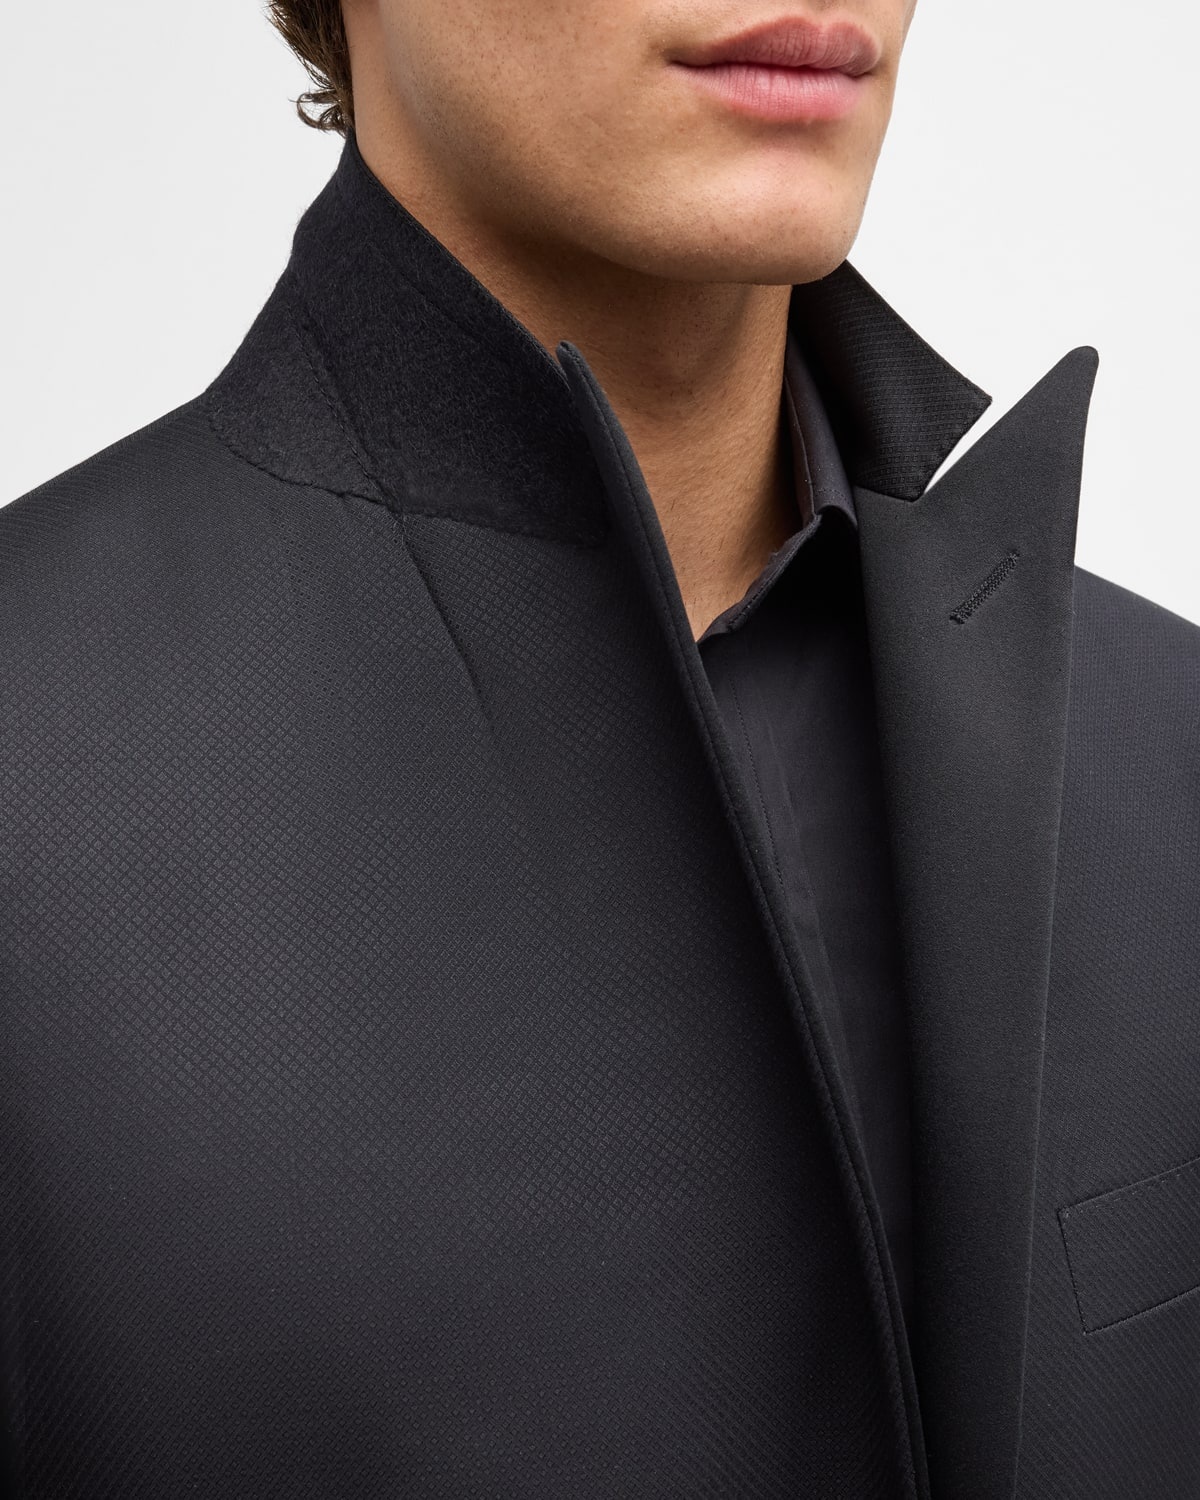 Men's Wool Diamond Weave Tuxedo - 7